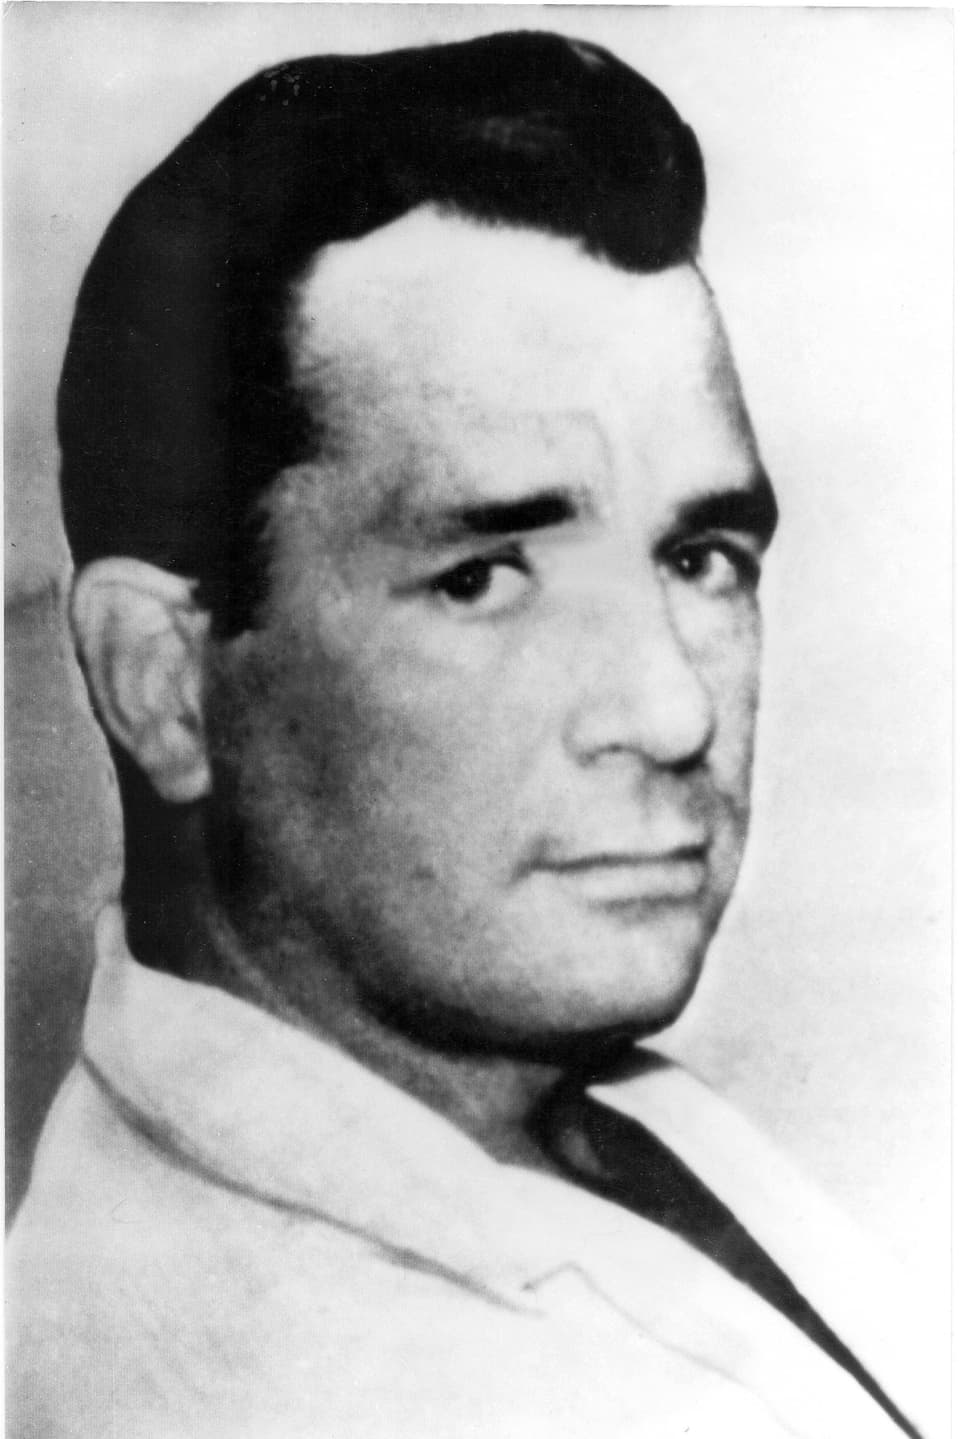 Jack Kerouac, Porträtbild, in weissem Sacko ohne Hemd.